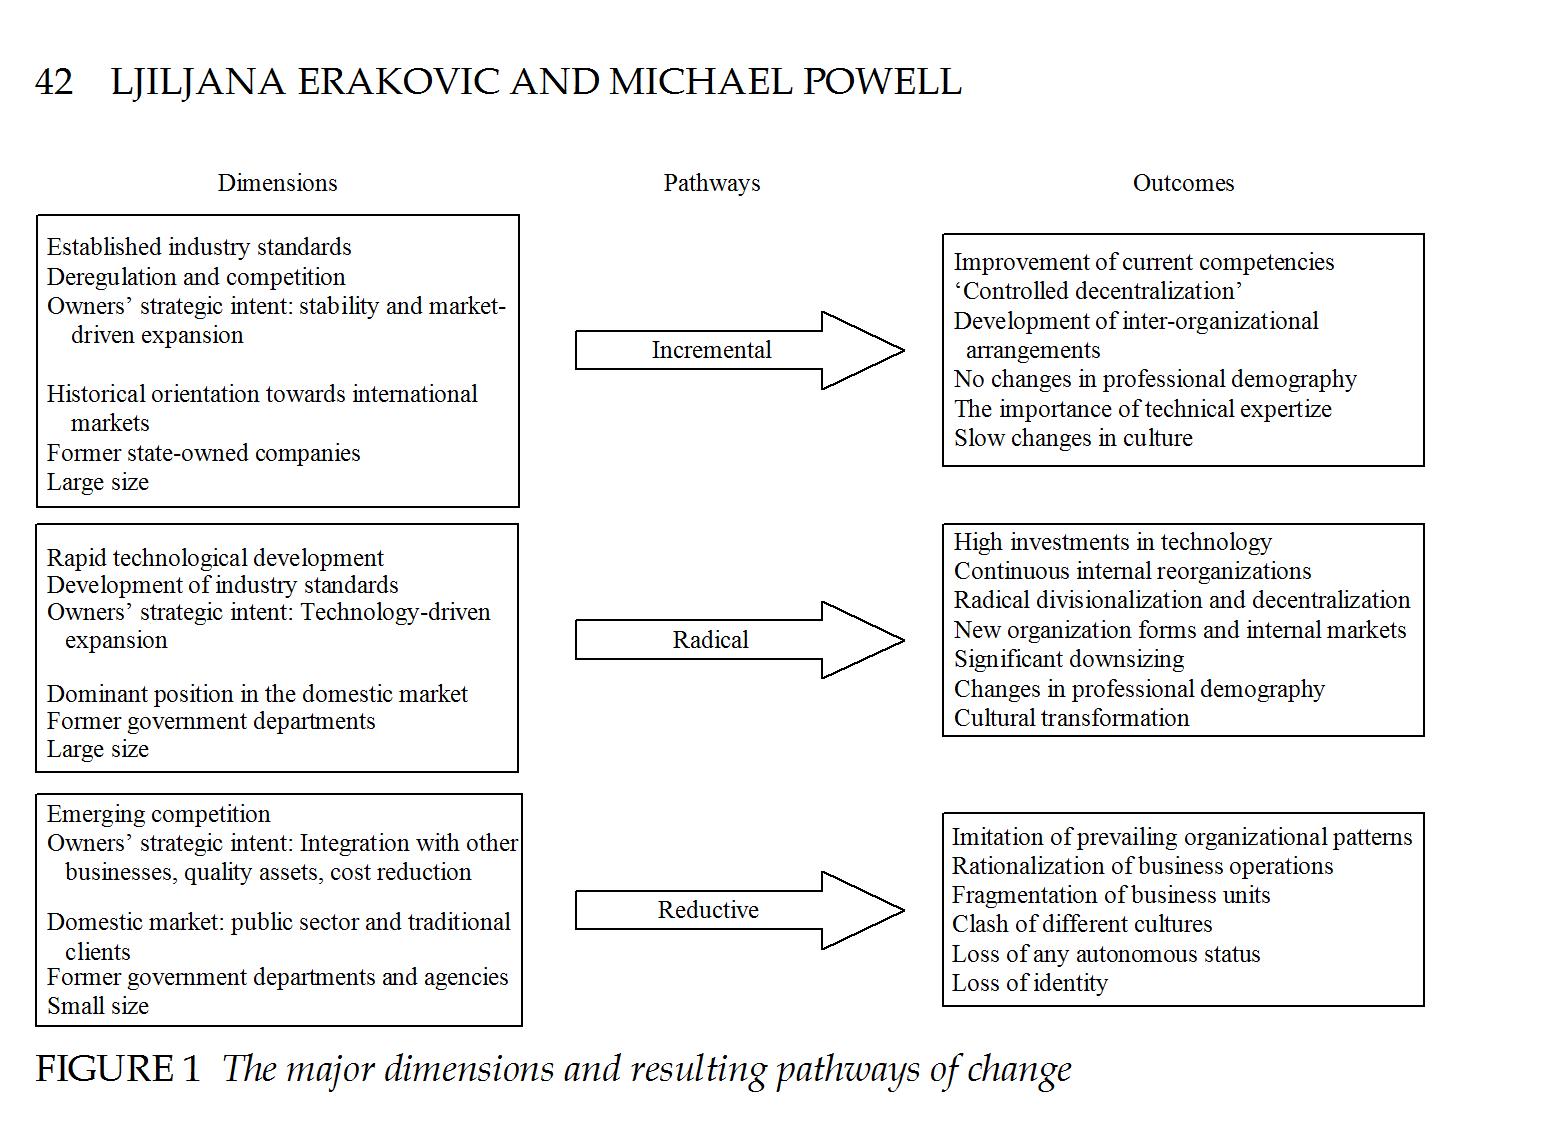 The Dimensions-Pathway-Outcomes Model by Ljiljana Erakovic and Michael Powell  Source: Powell et al (1991)